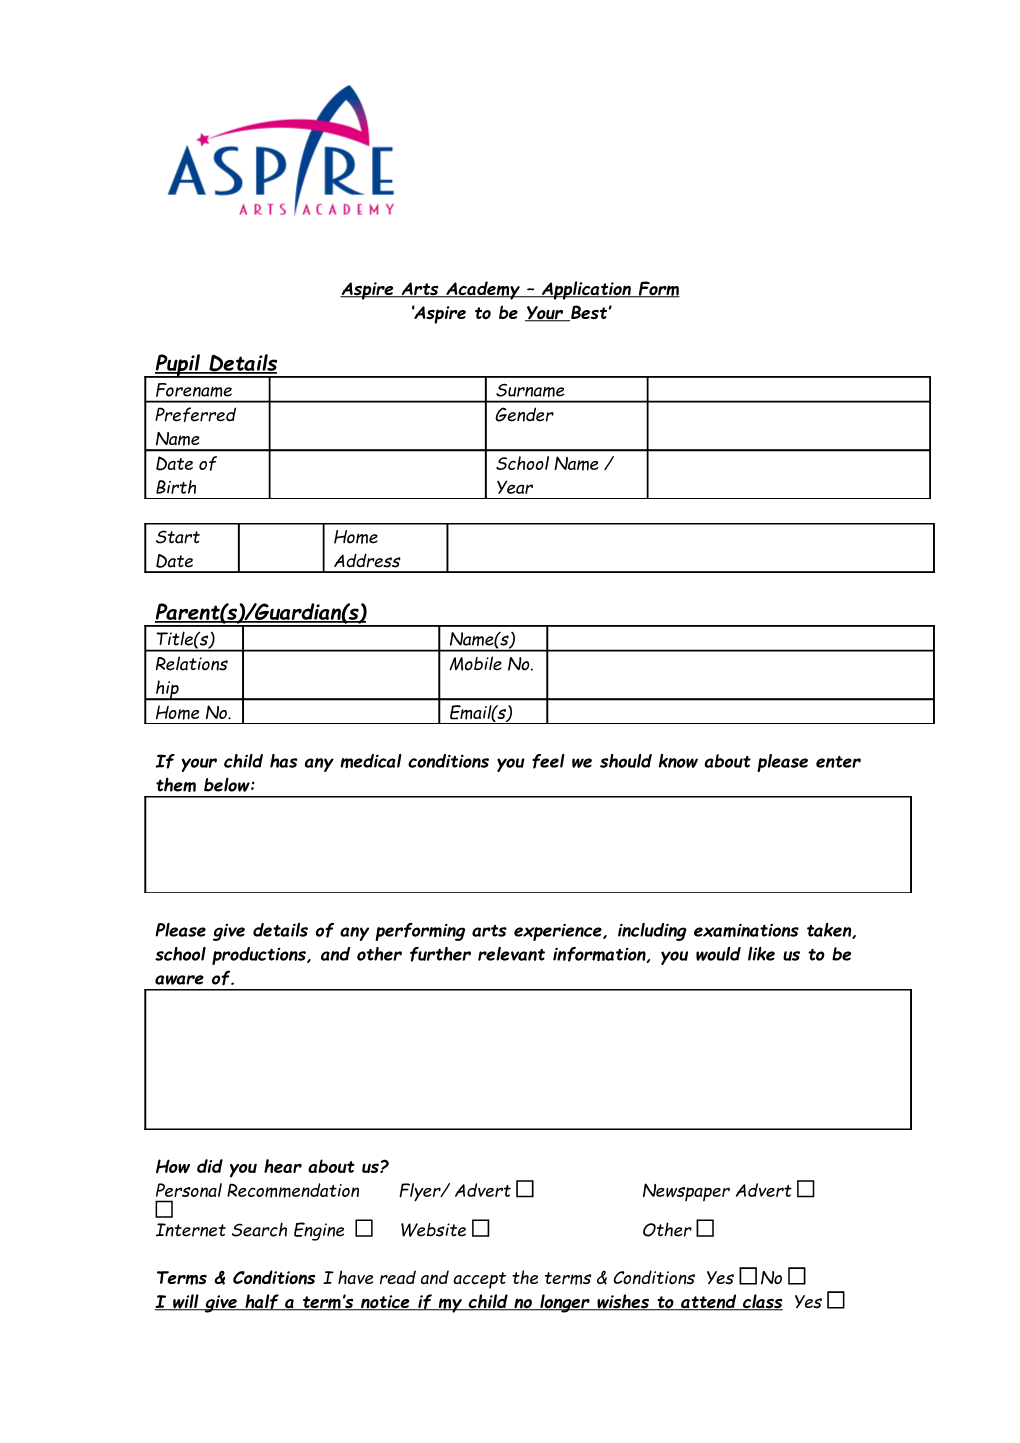 Aspire Arts Academy Application Form